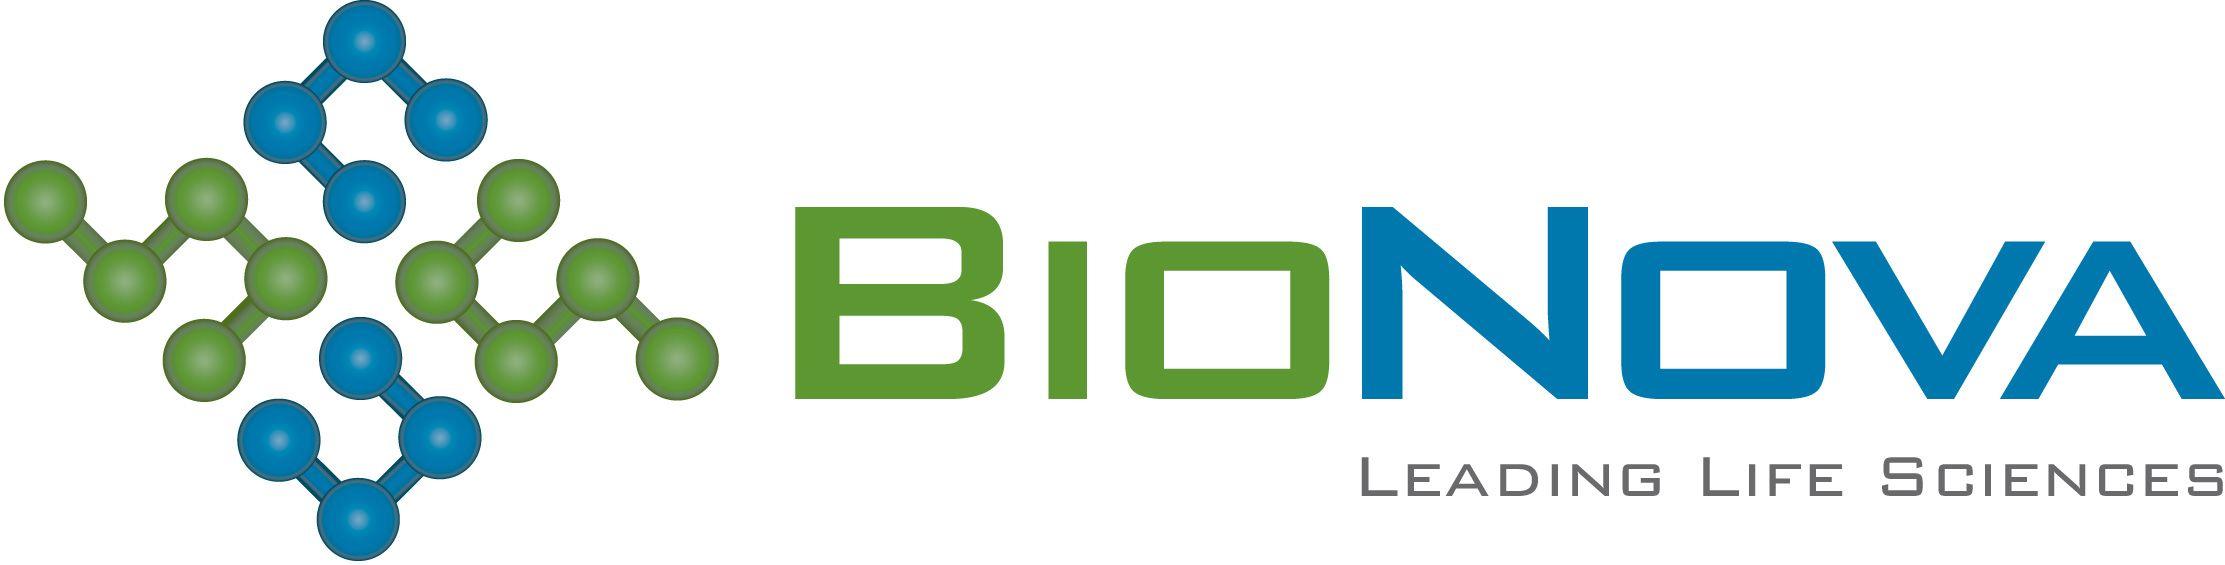 Biotechnology Company Logo - BIOTECanada - National Biotech Accord